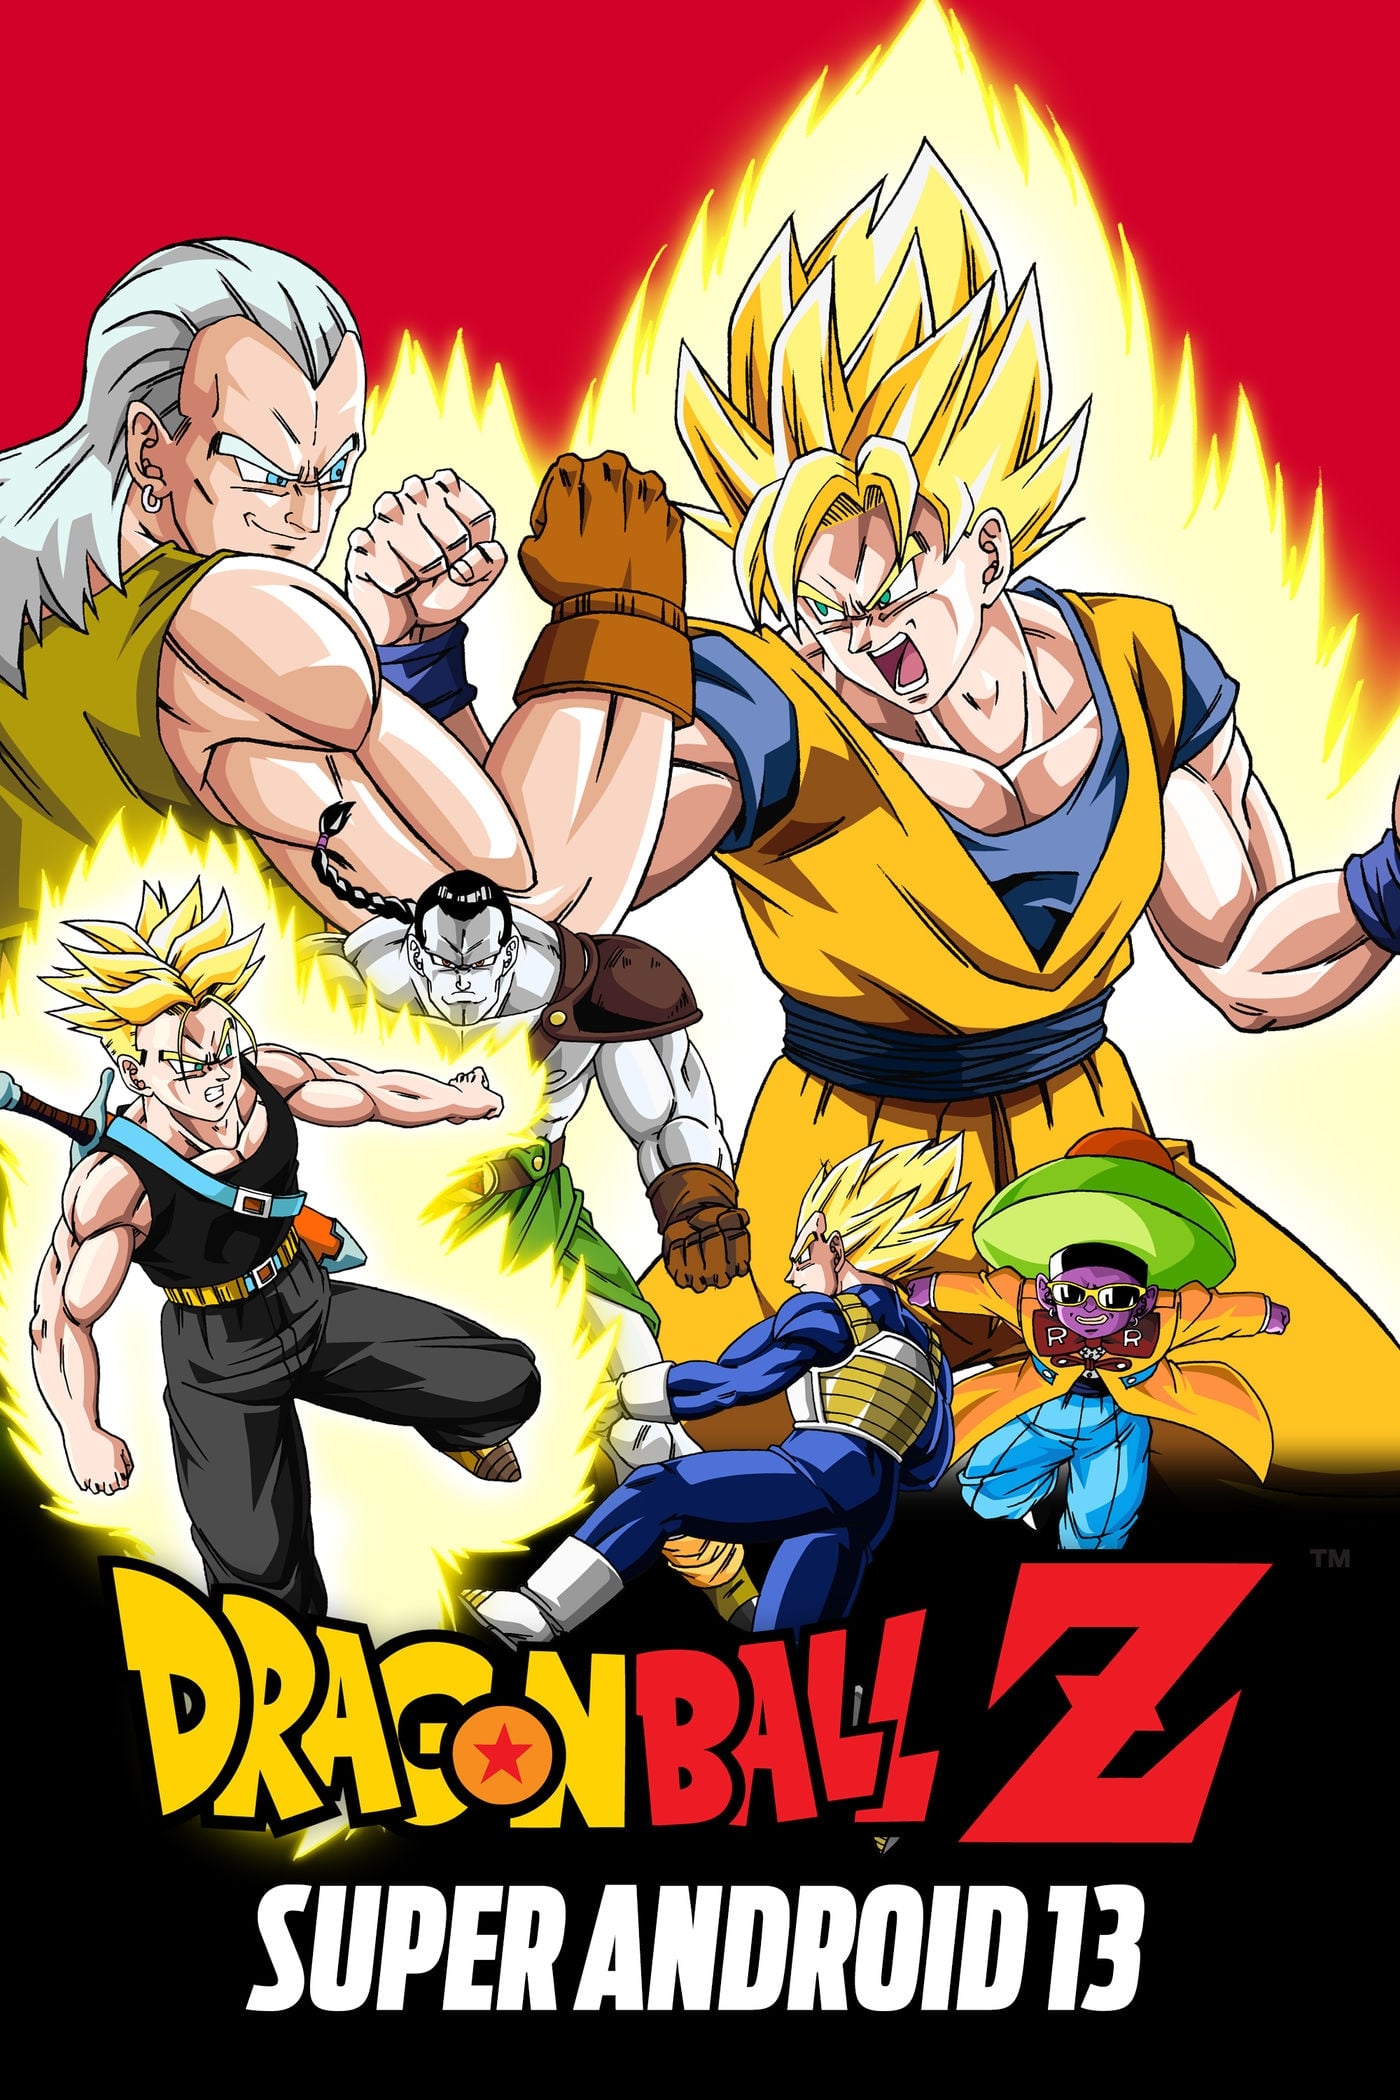 Dragon Ball Z: Los tres grandes Super Saiyans